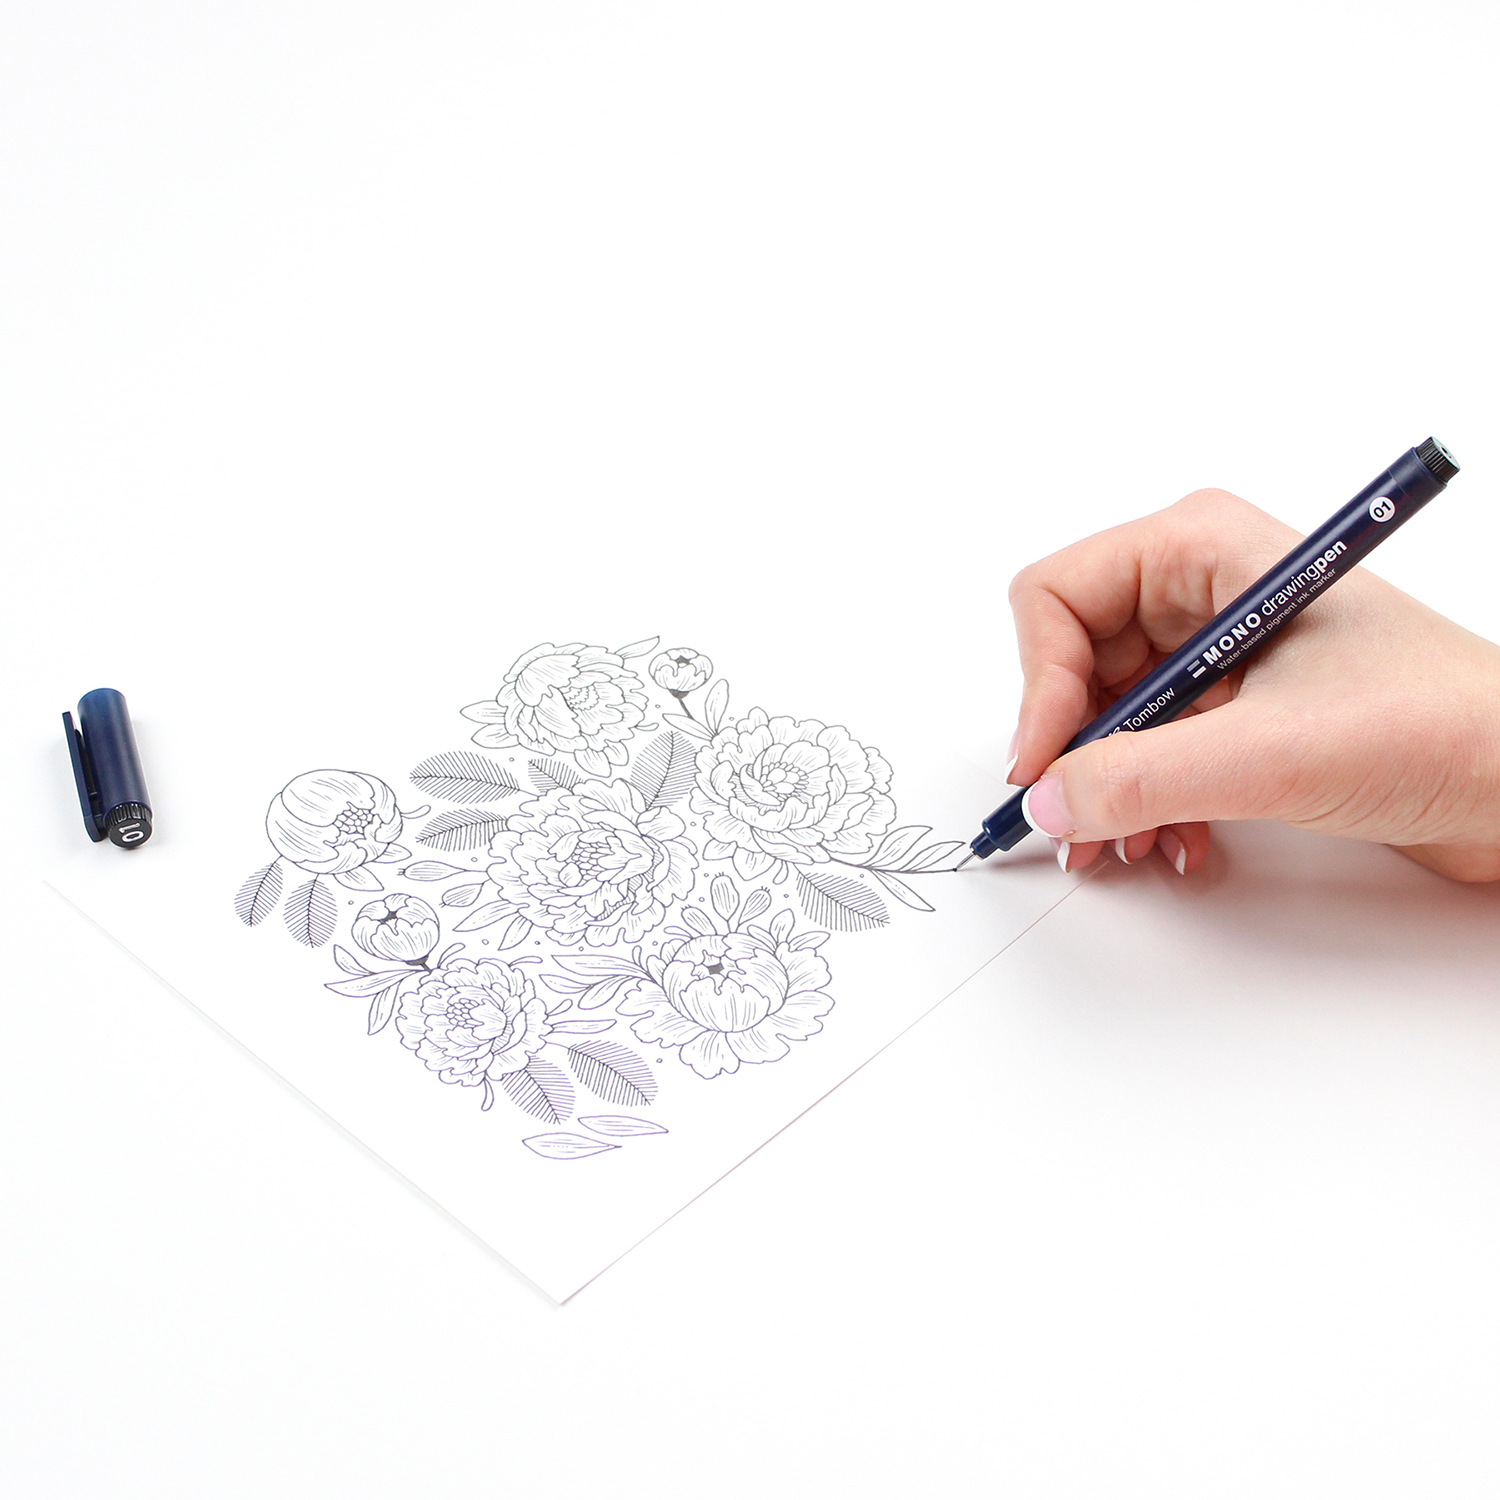 Fineliners Pens, Fineliner Color Pen Set Sketch Writing Drawing